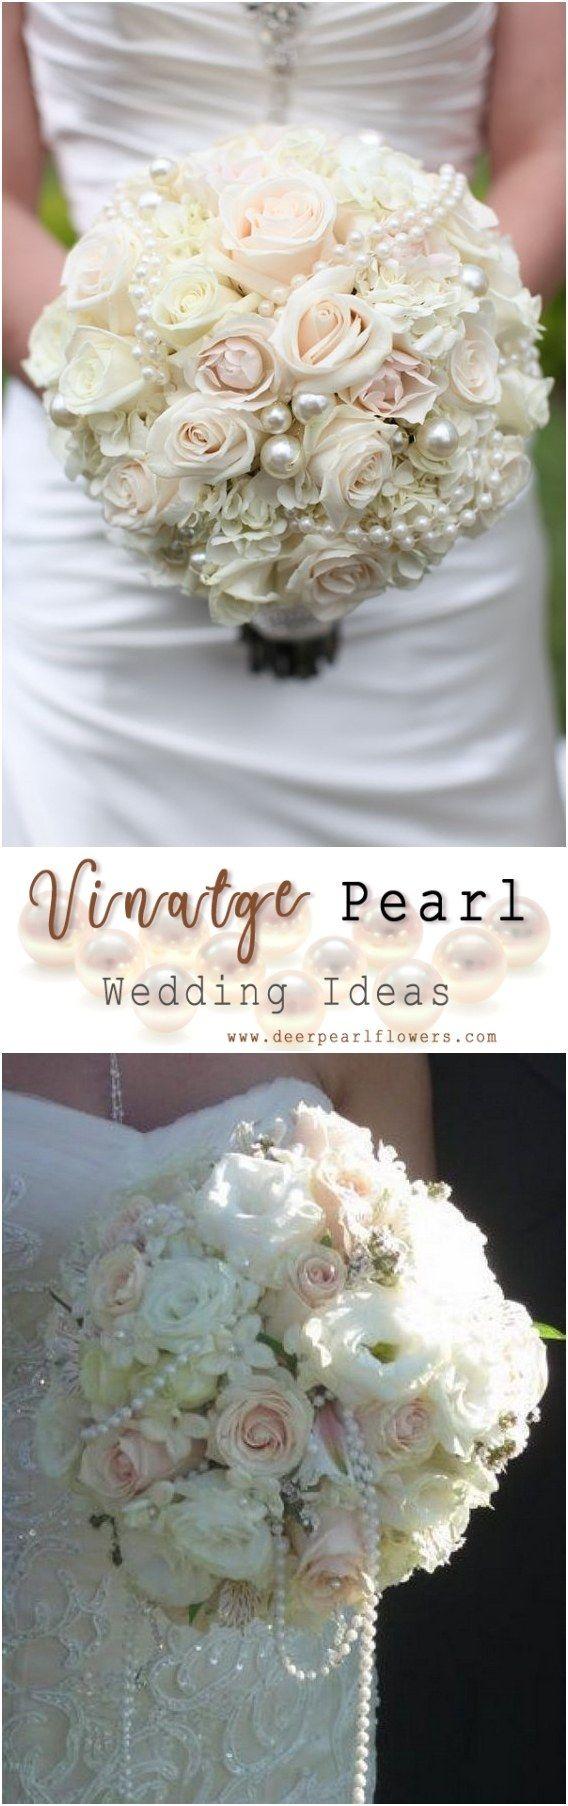 Mariage - 35 Chic Vintage Pearl Wedding Ideas You’ll Love